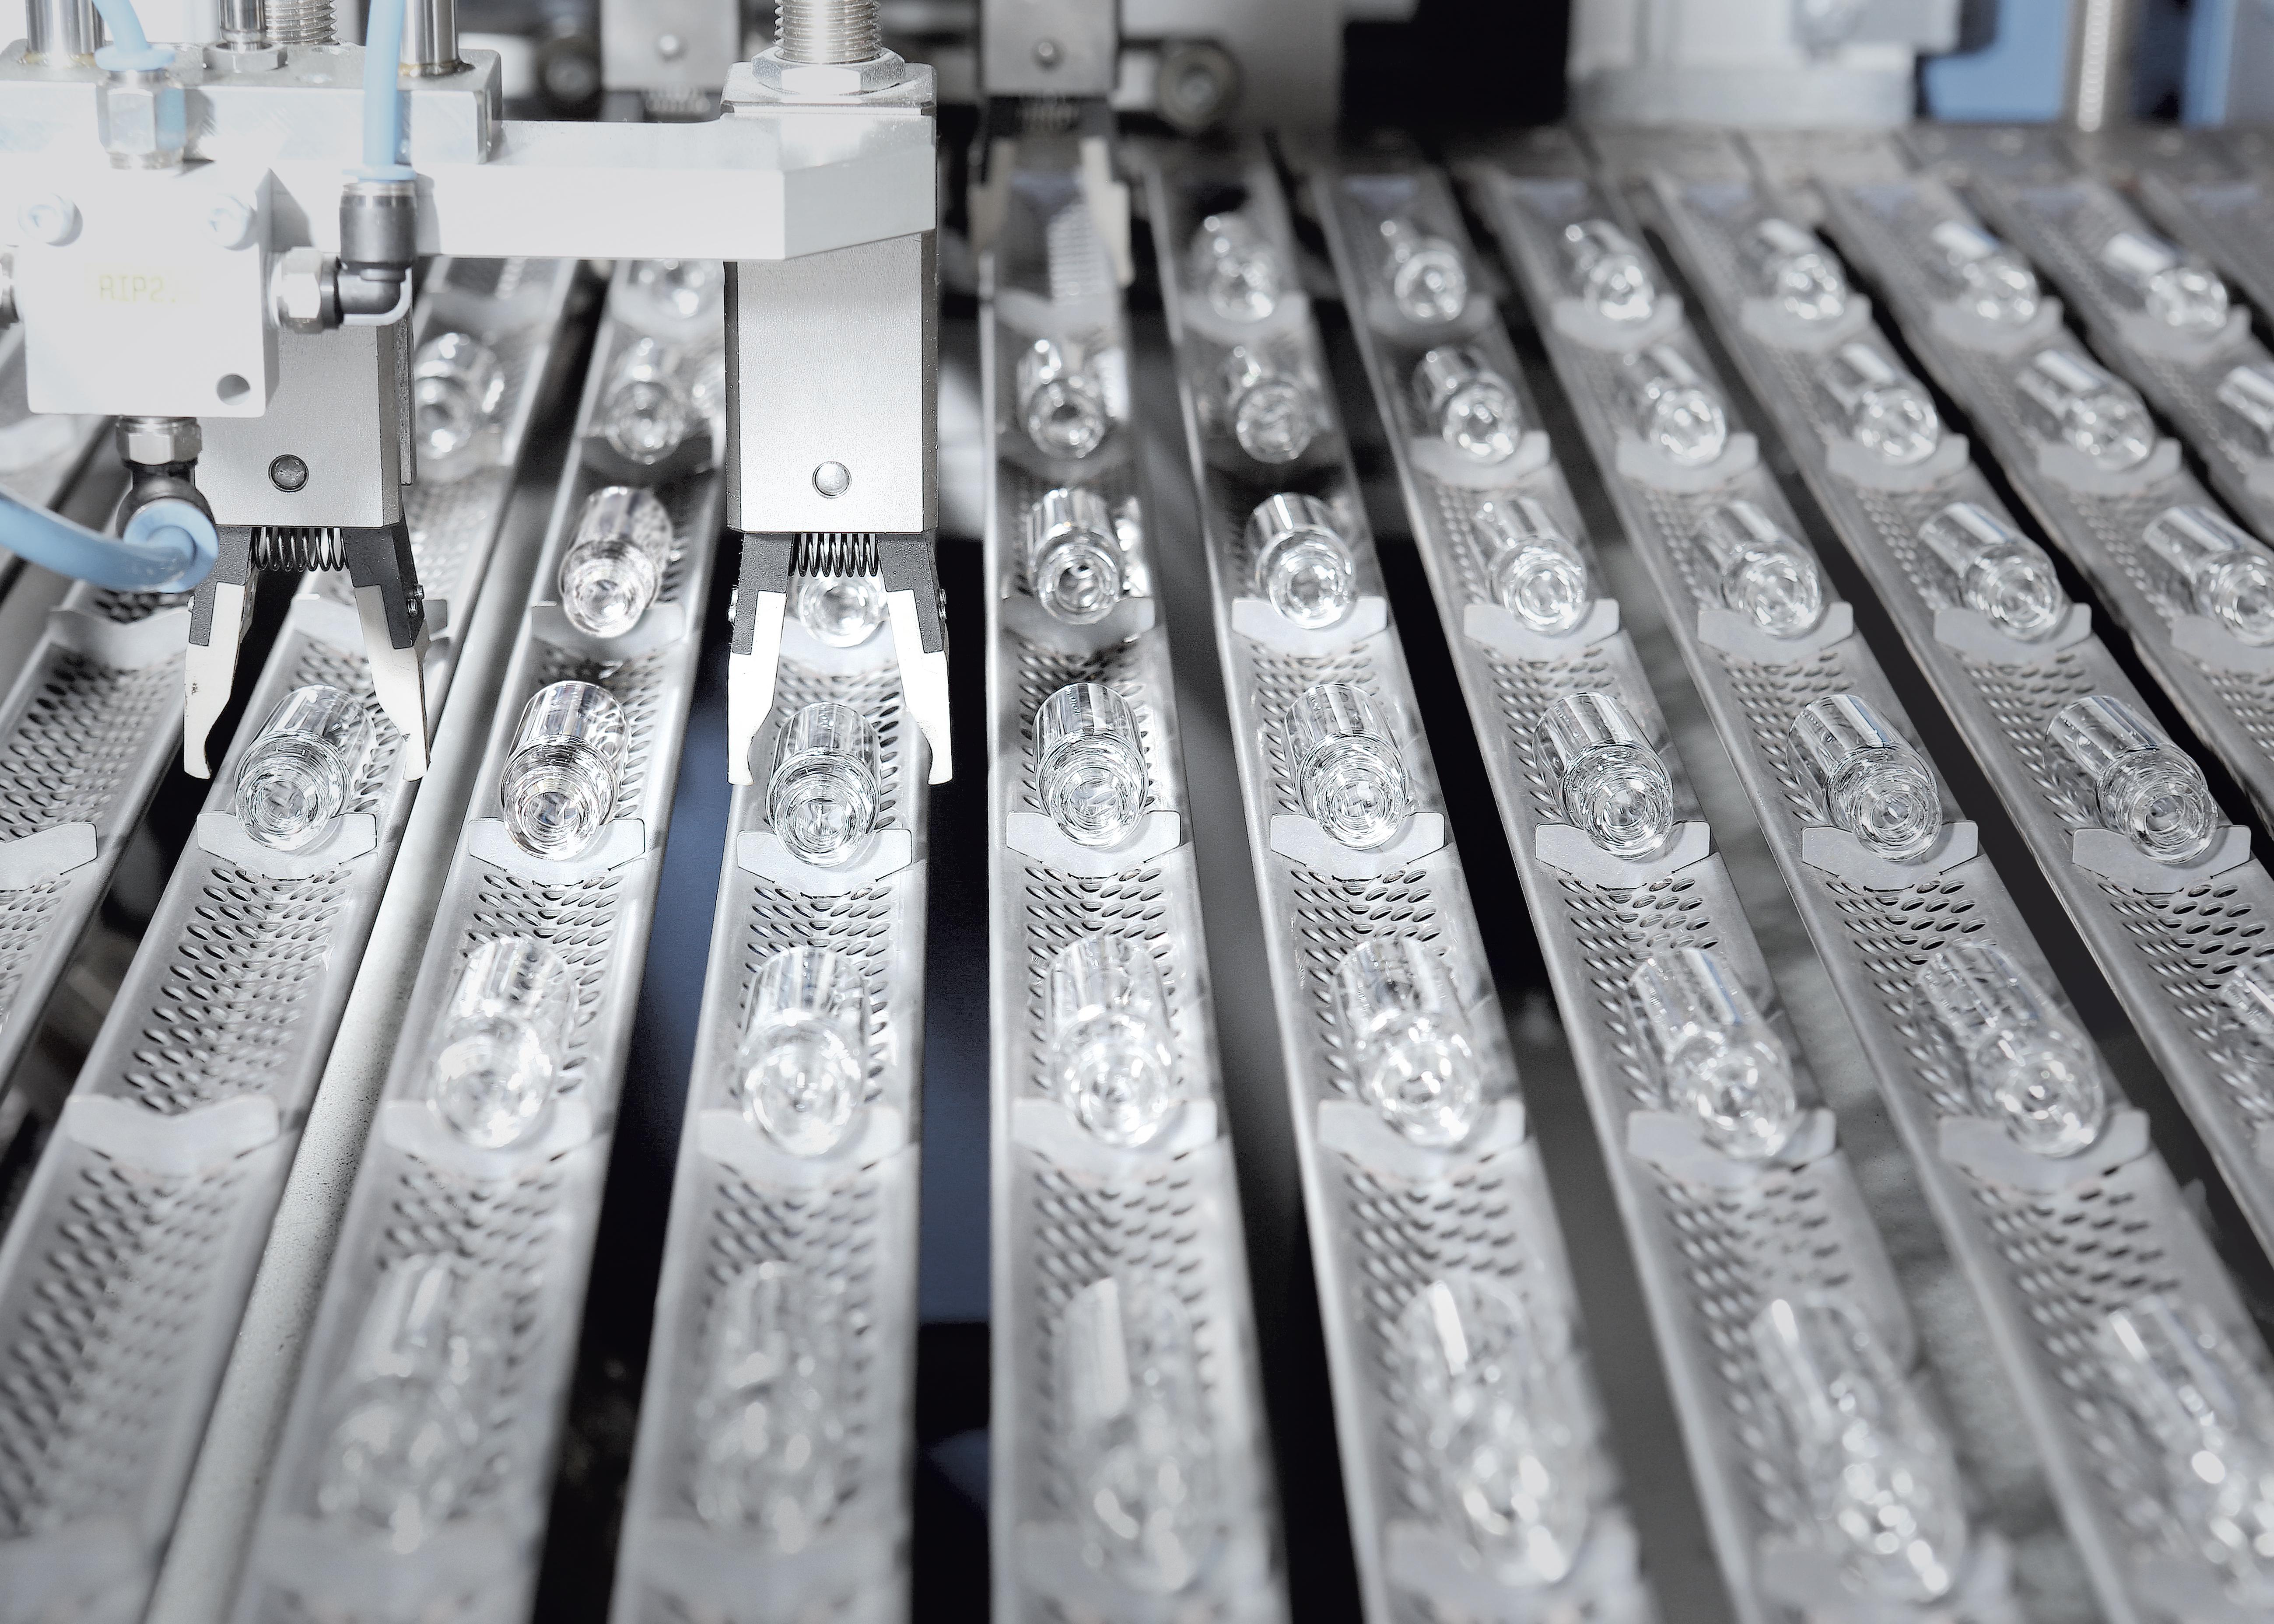 SCHOTT pharmaceutical glass manufacturing equipment producing glass vials